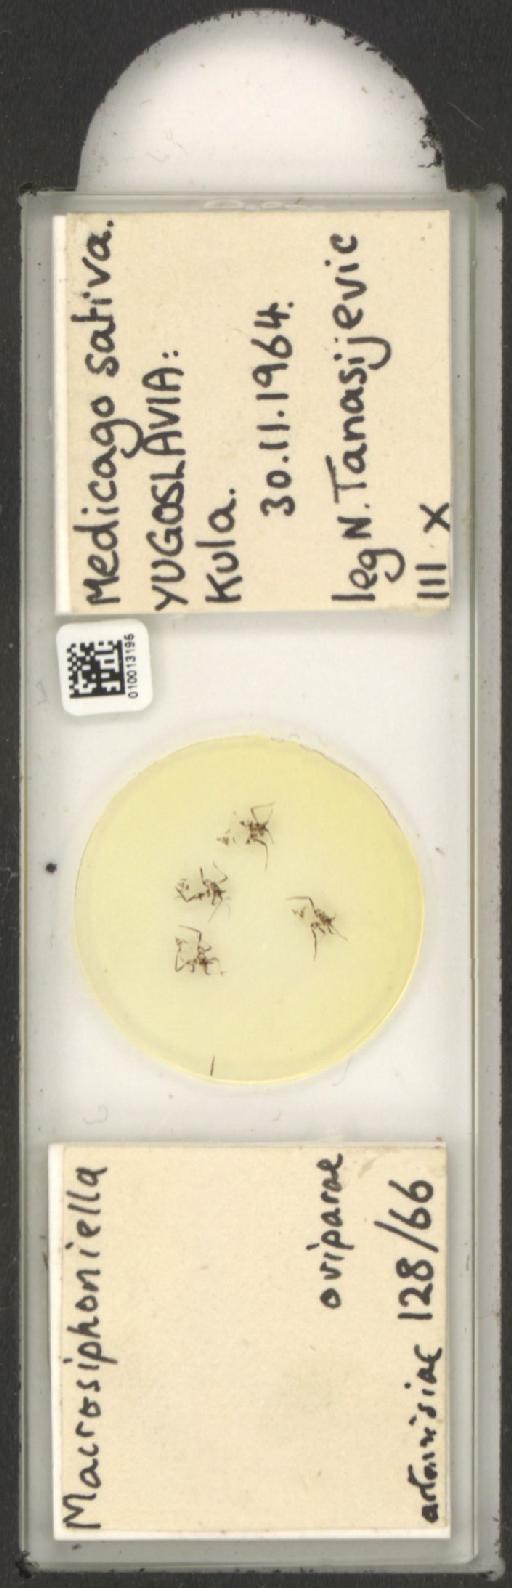 Macrosiphoniella artemisiae Fonscolombe, 1841 - 010013195_112659_1094715